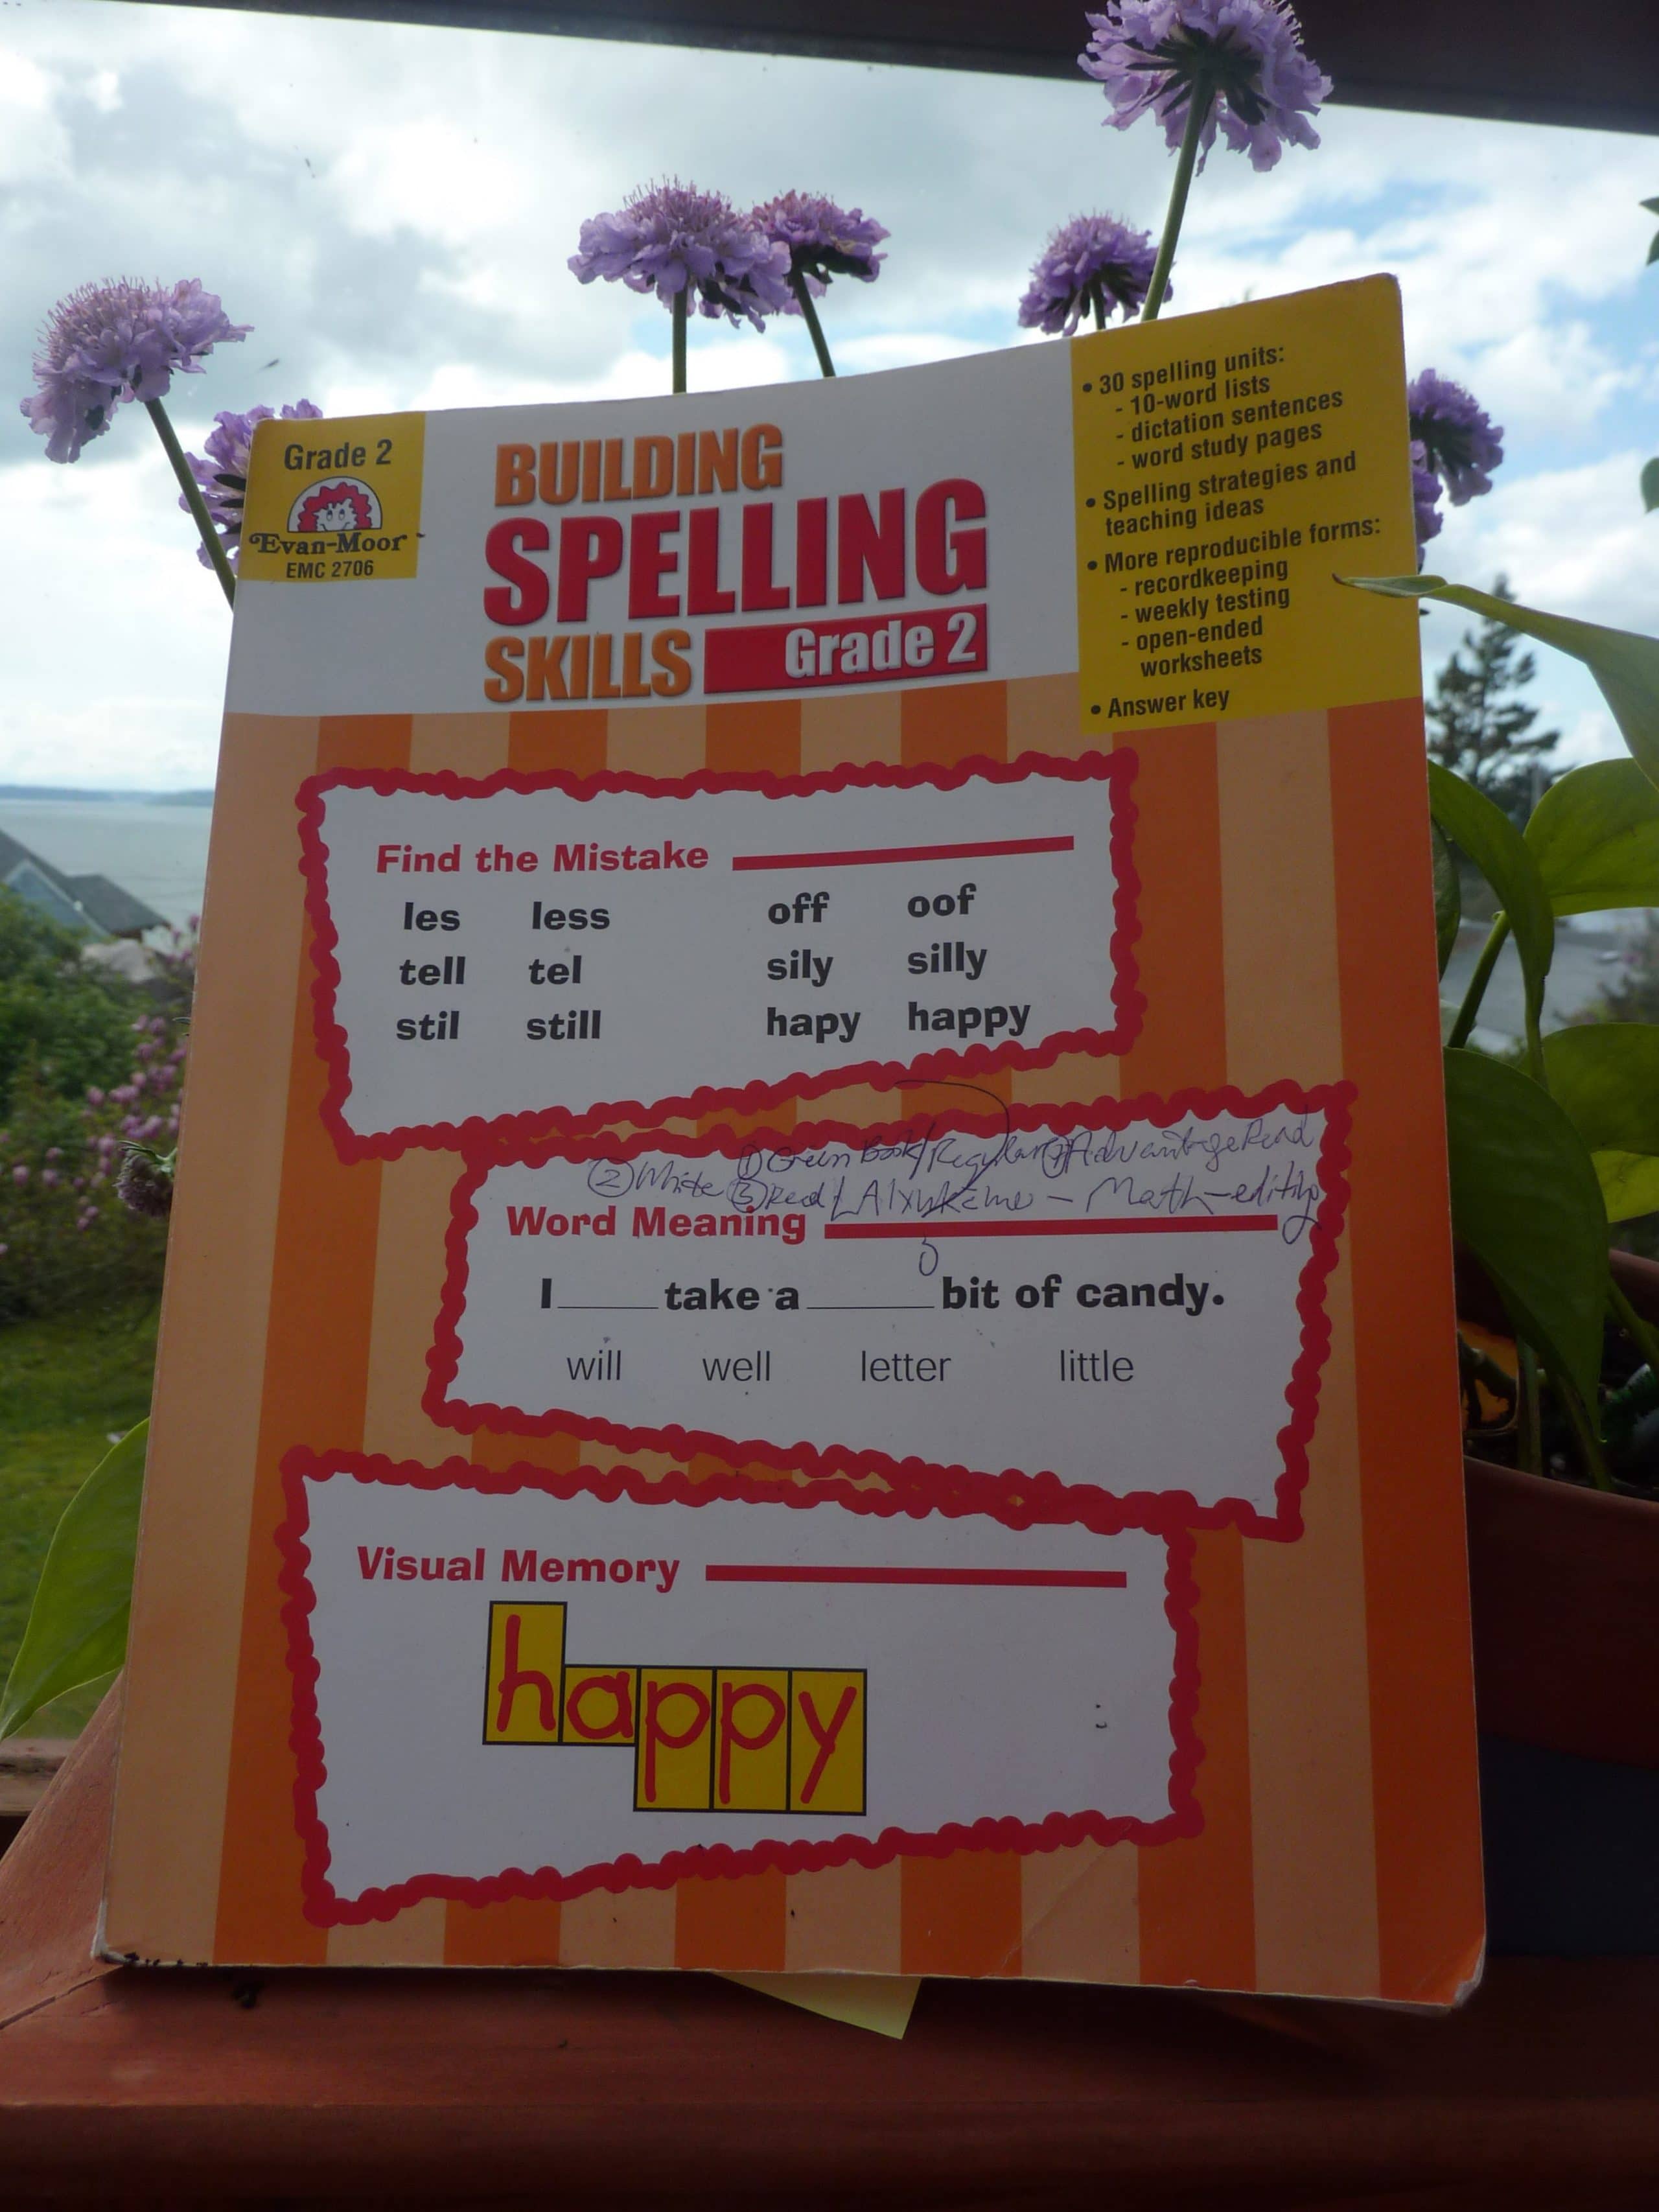 Evan-Moor’s Building Spelling Skills – Grades 1 – 6